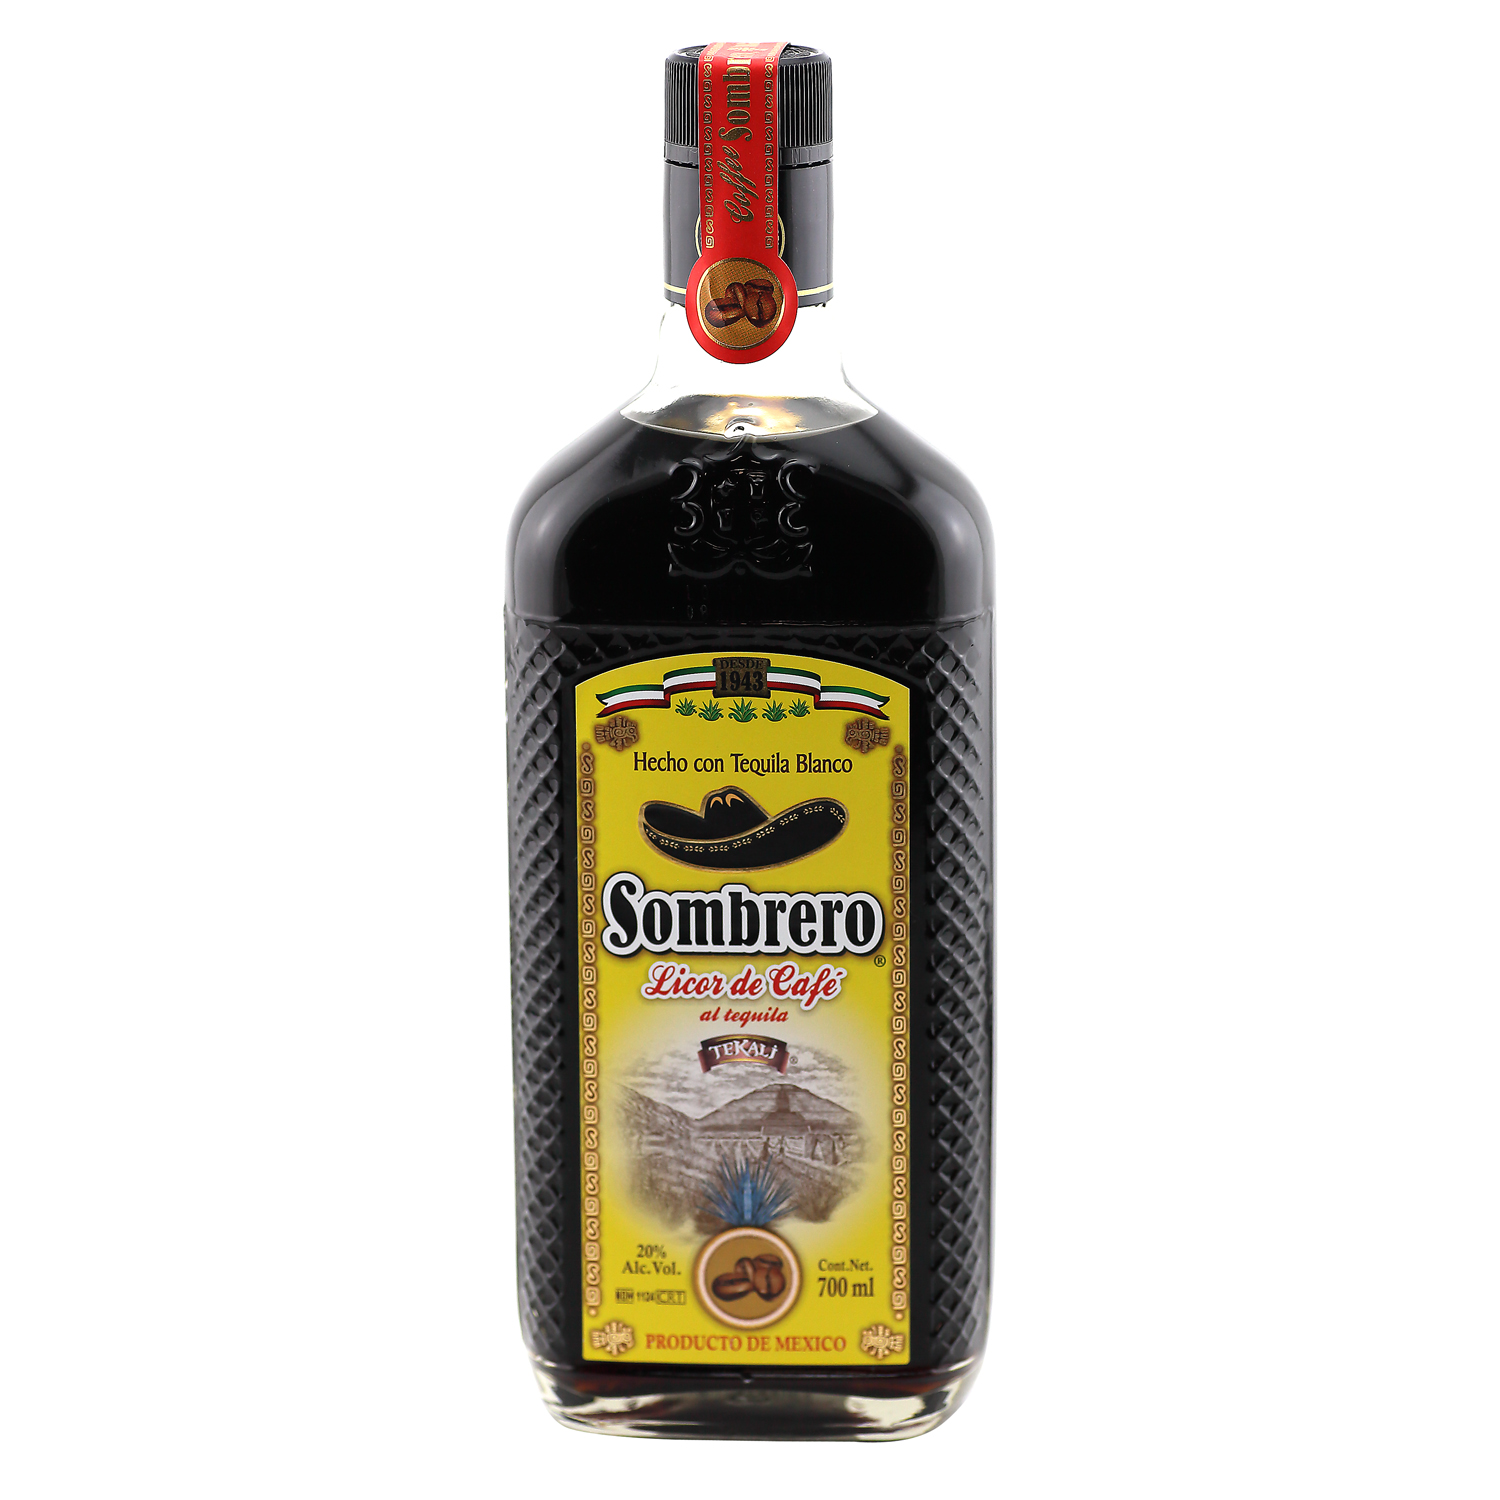 Sombrero / Tequila Kaffee Likör / 20% Vol. 0,7 ltr. / Licor de Cafe